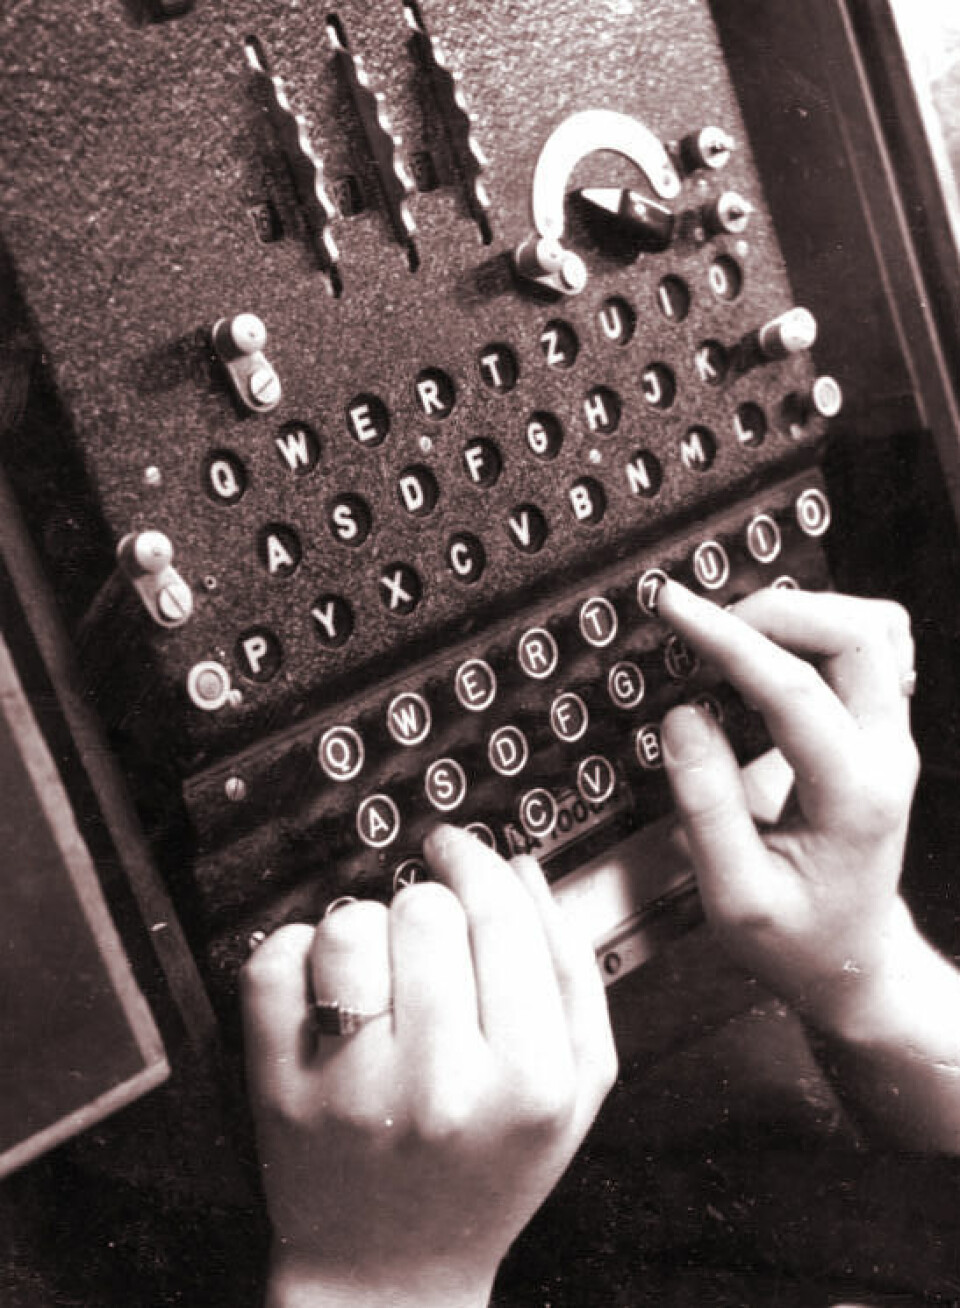 Den tyske Enigma krypteringsmaskinen, i bruk under Annen verdenskrig. (Foto: Walther, Bundesarchiv. Creative Commons Attribution-Share Alike 3.0 Germany)